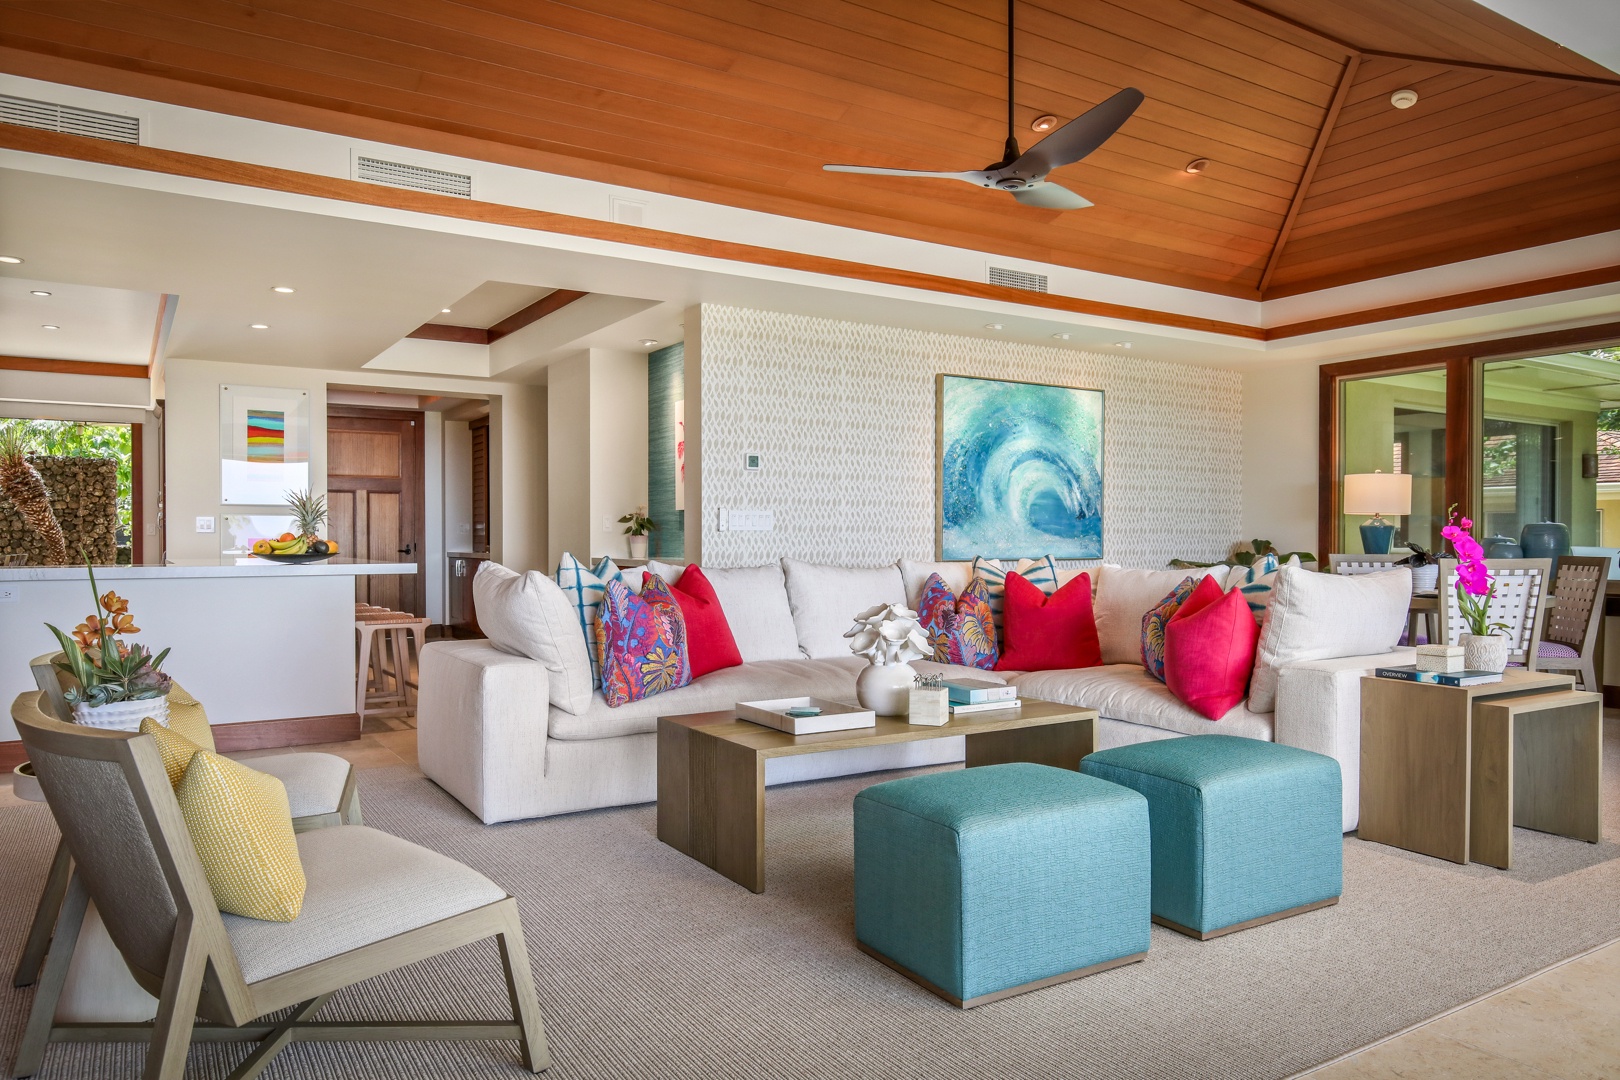 Kailua Kona Vacation Rentals, 4BD Hainoa Estate (122) at Four Seasons Resort at Hualalai - Chic decor with an upscale island vibe.